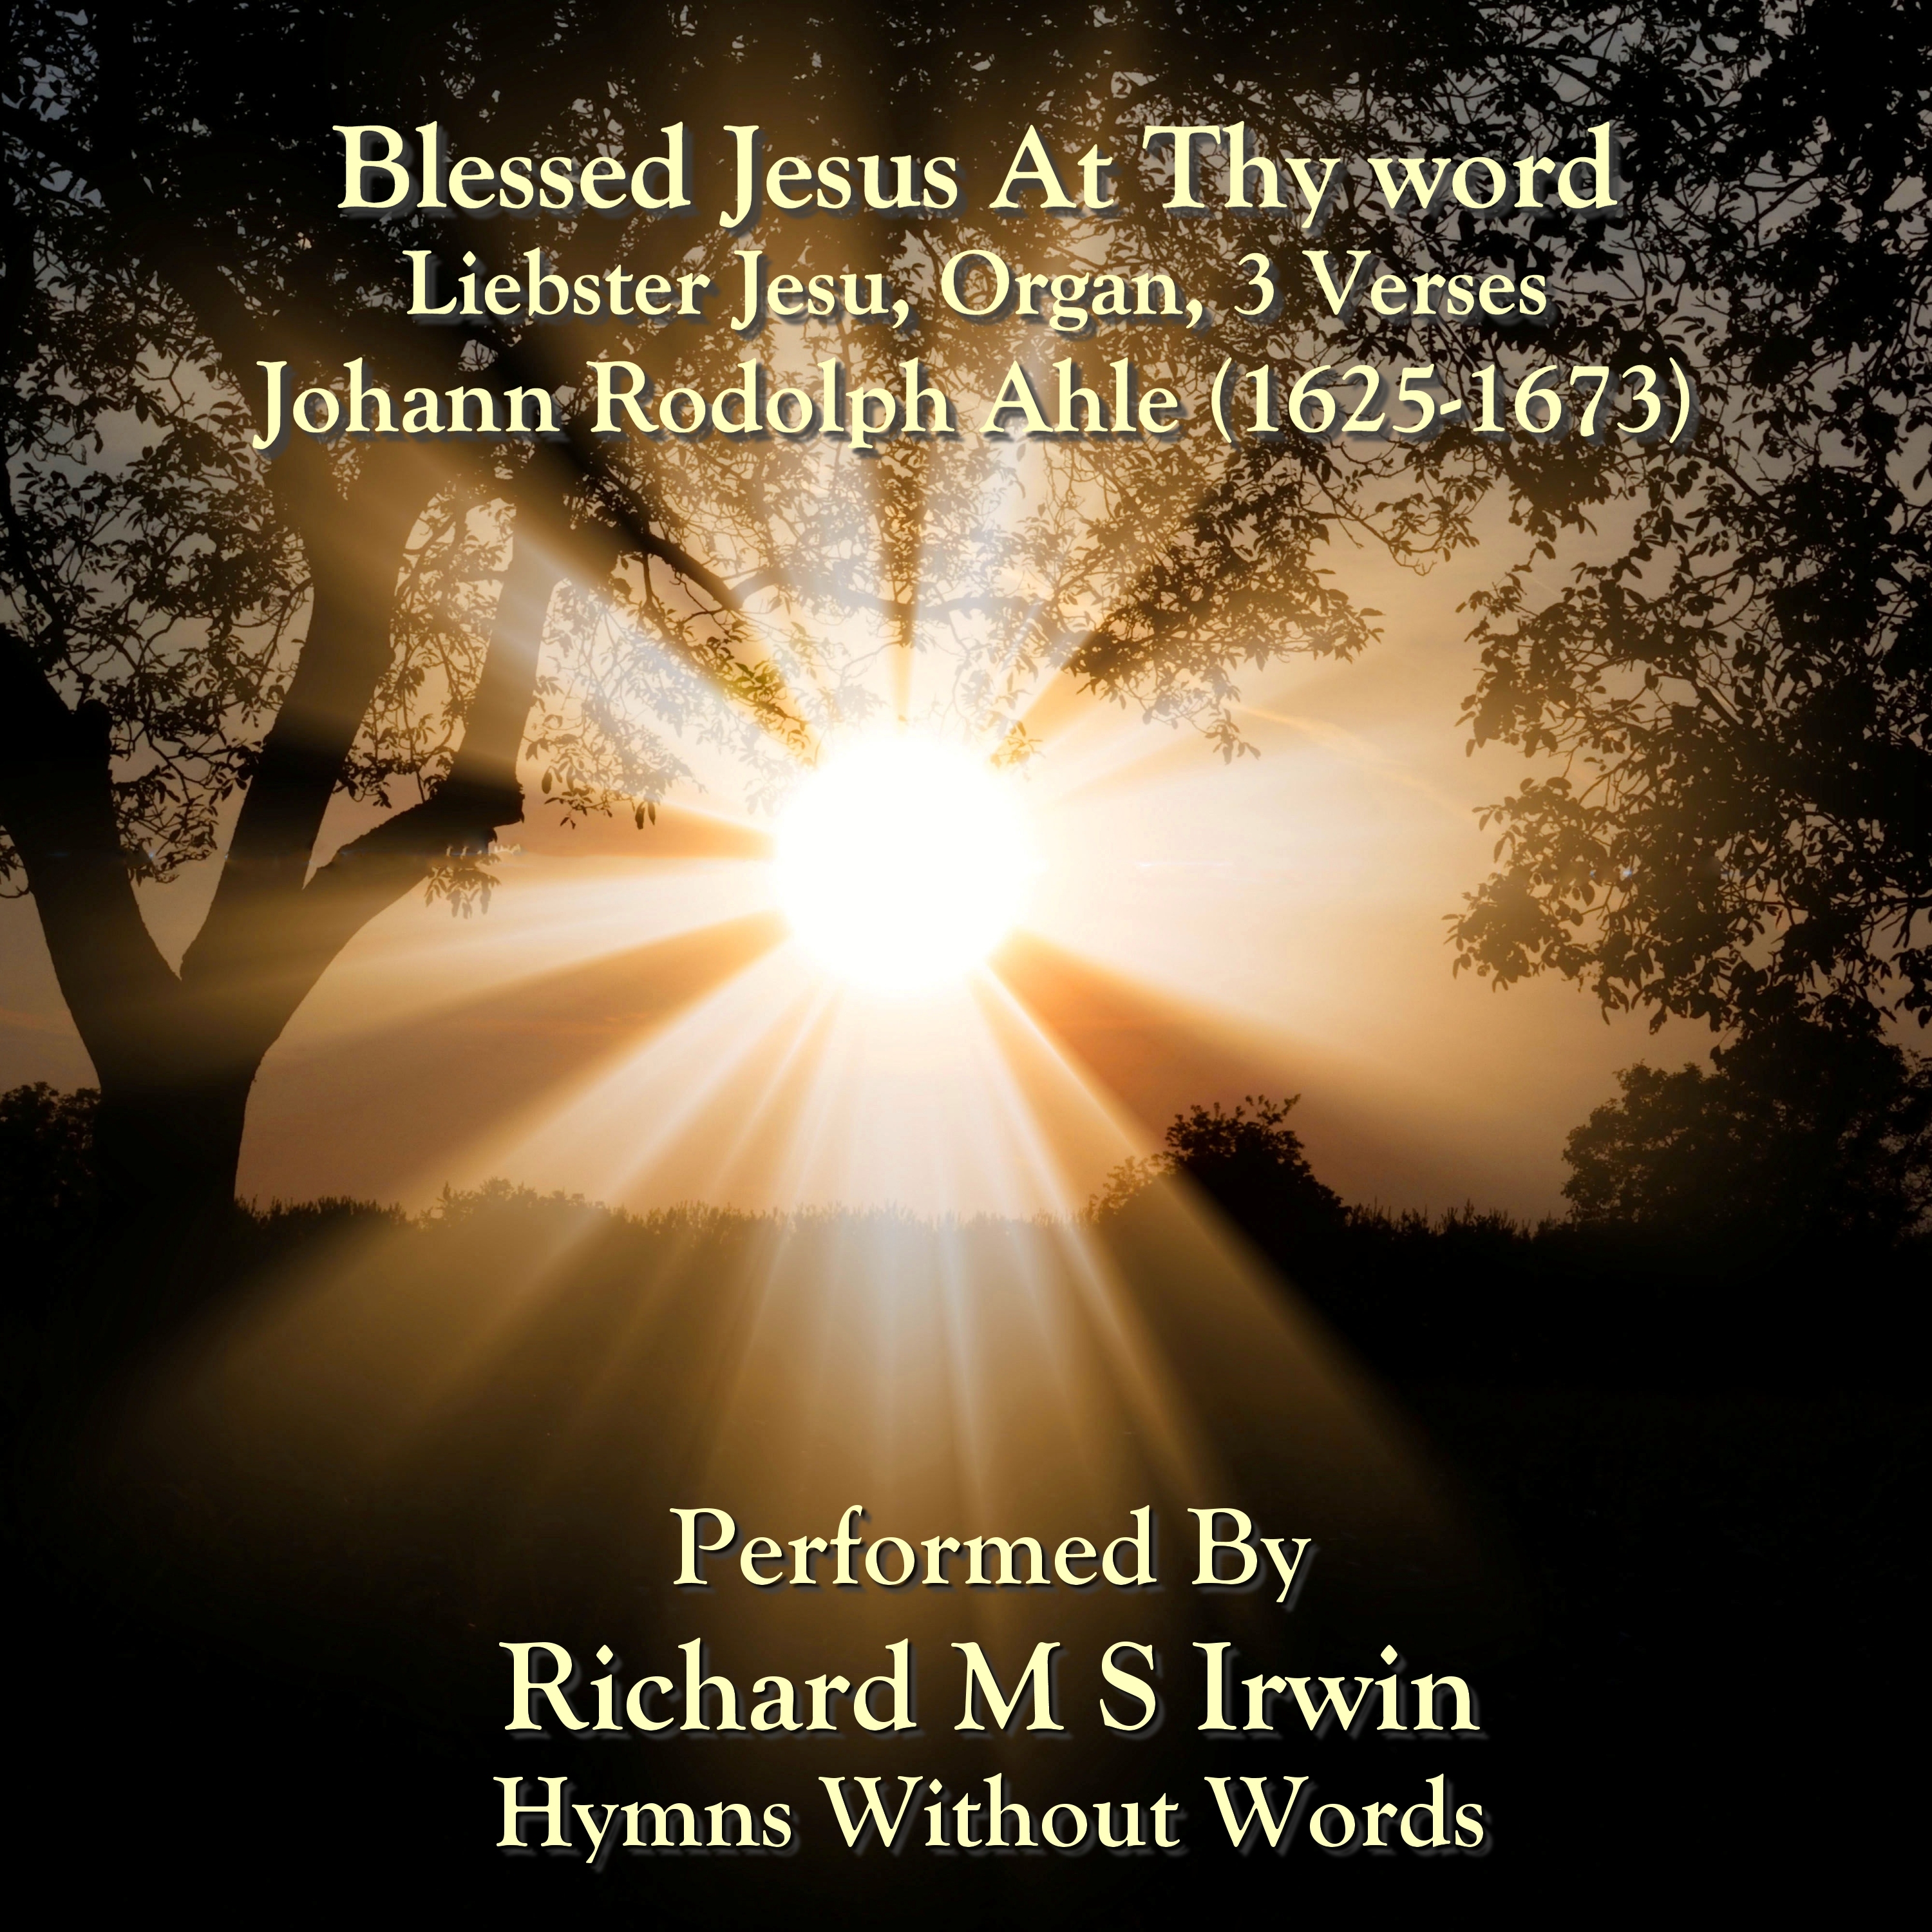 Blessed Jesus At Your Word (Liebster Jesu, Organ, 3 Verses)